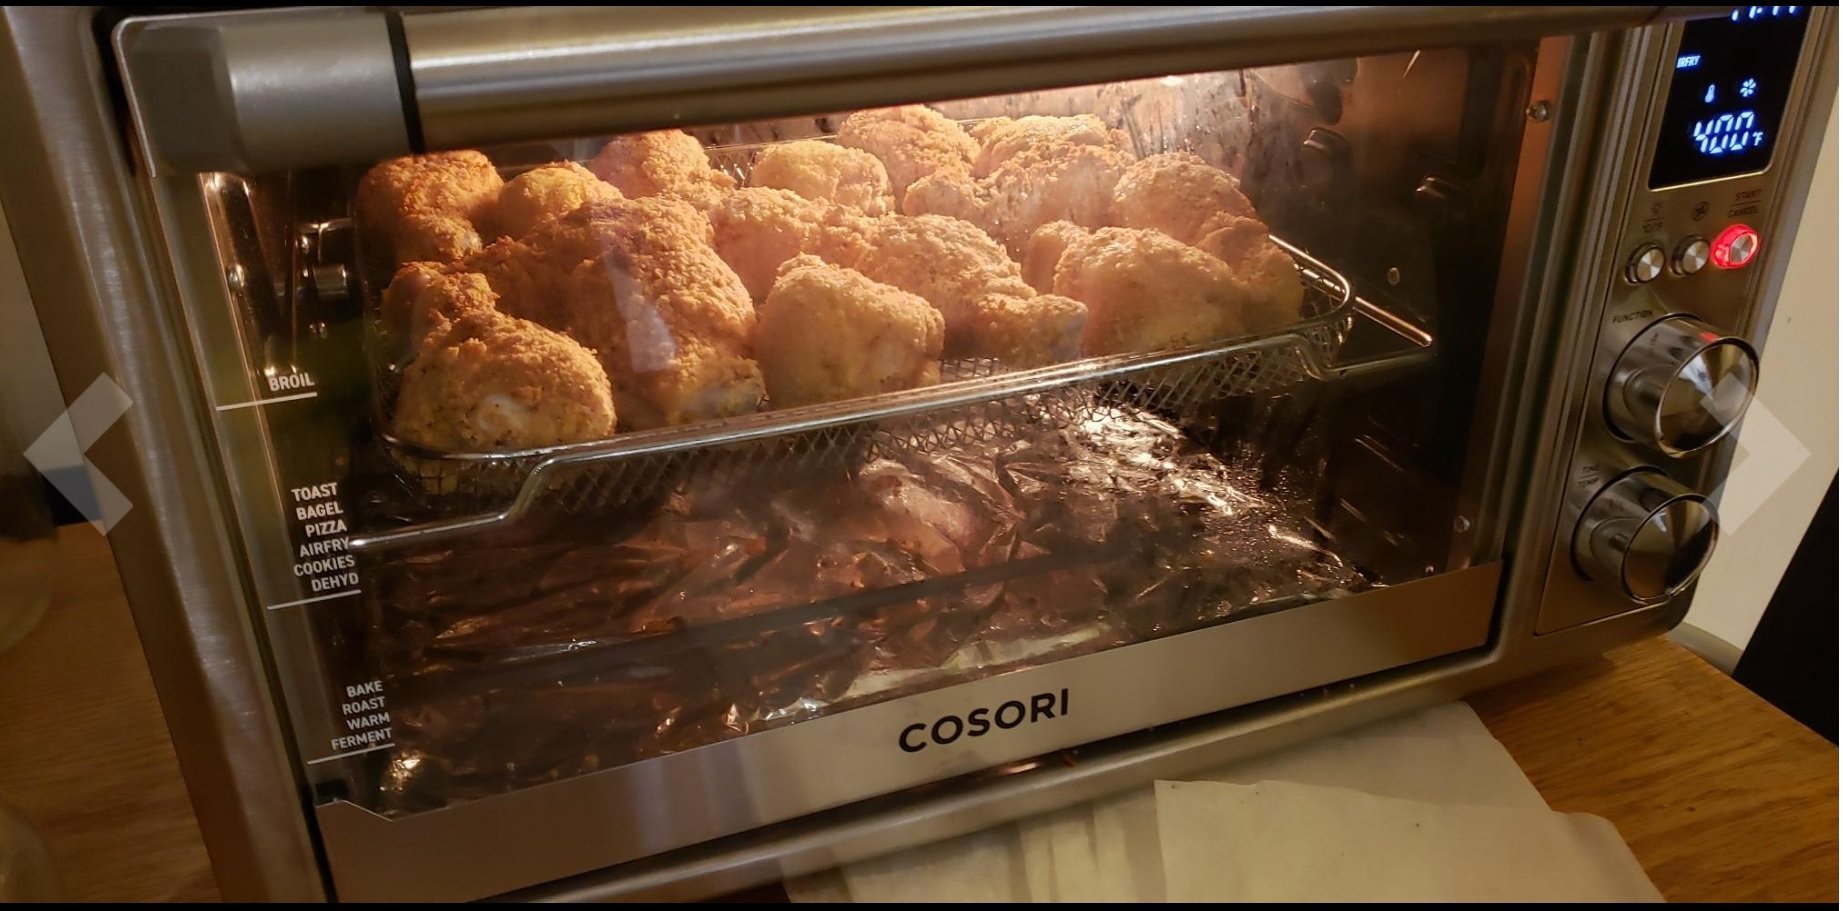 Cosori Air Fryer Toaster Oven.jpg